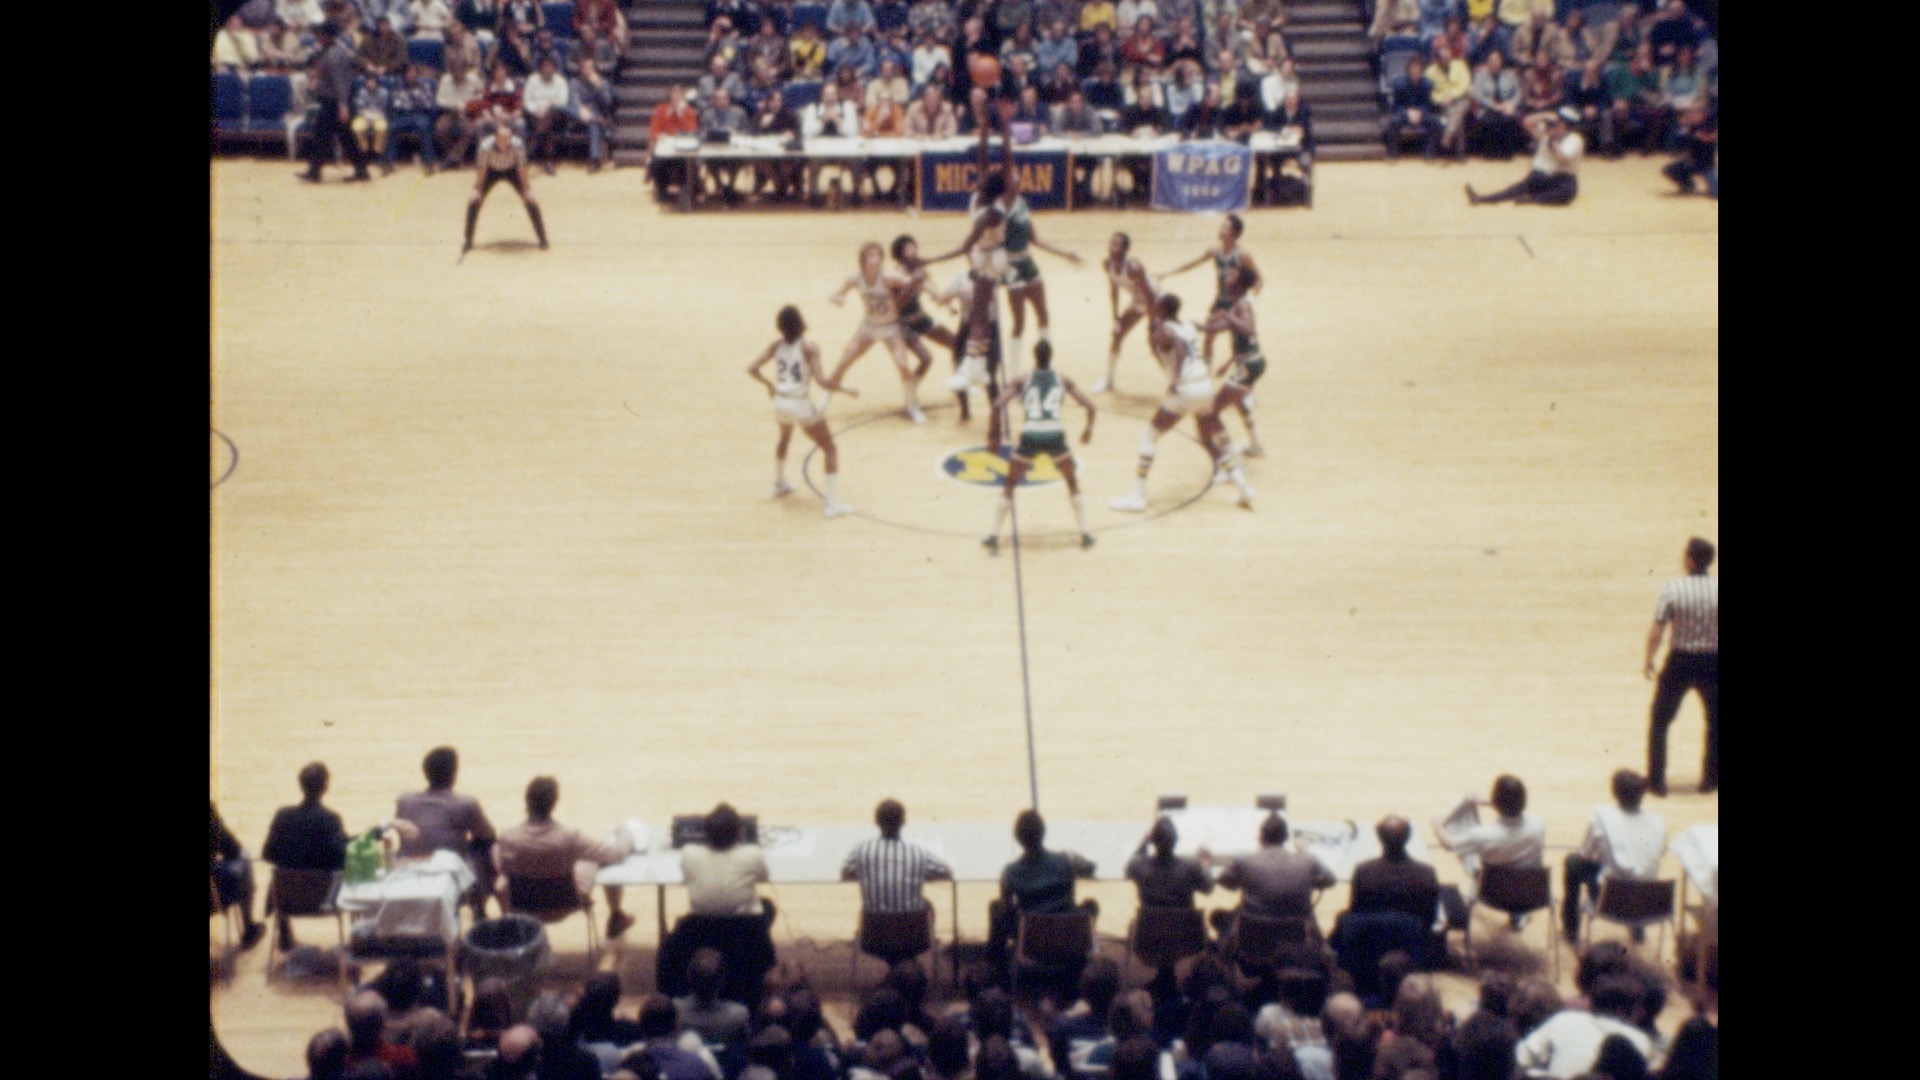 MSU Basketball vs. Michigan (away), 1976